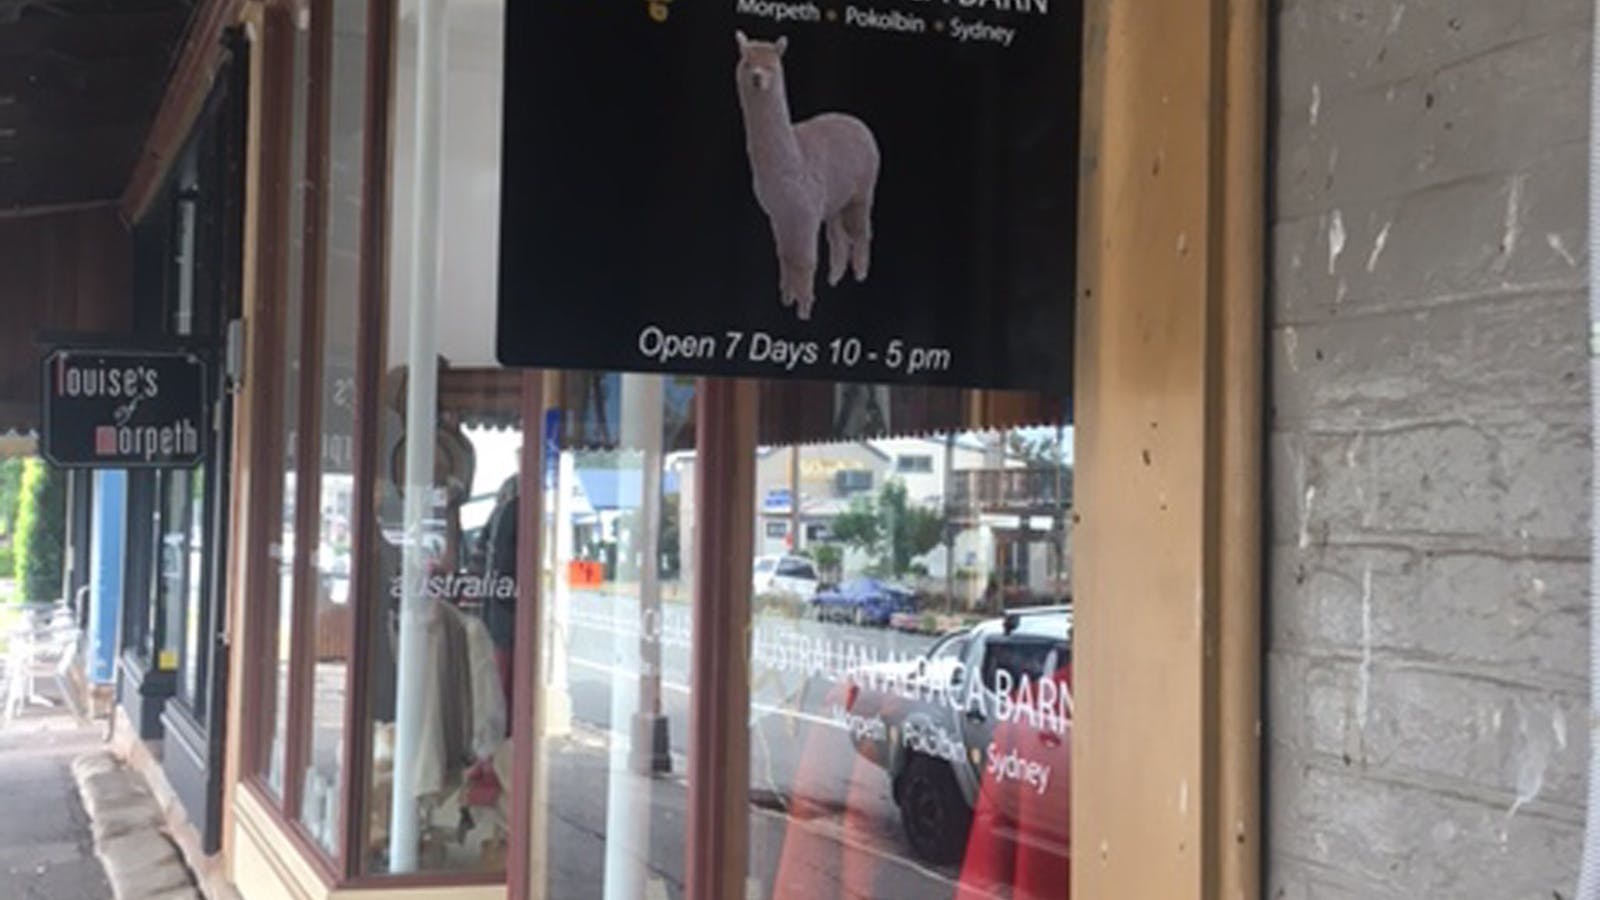 Australian Alpaca Barn Morpeth Store